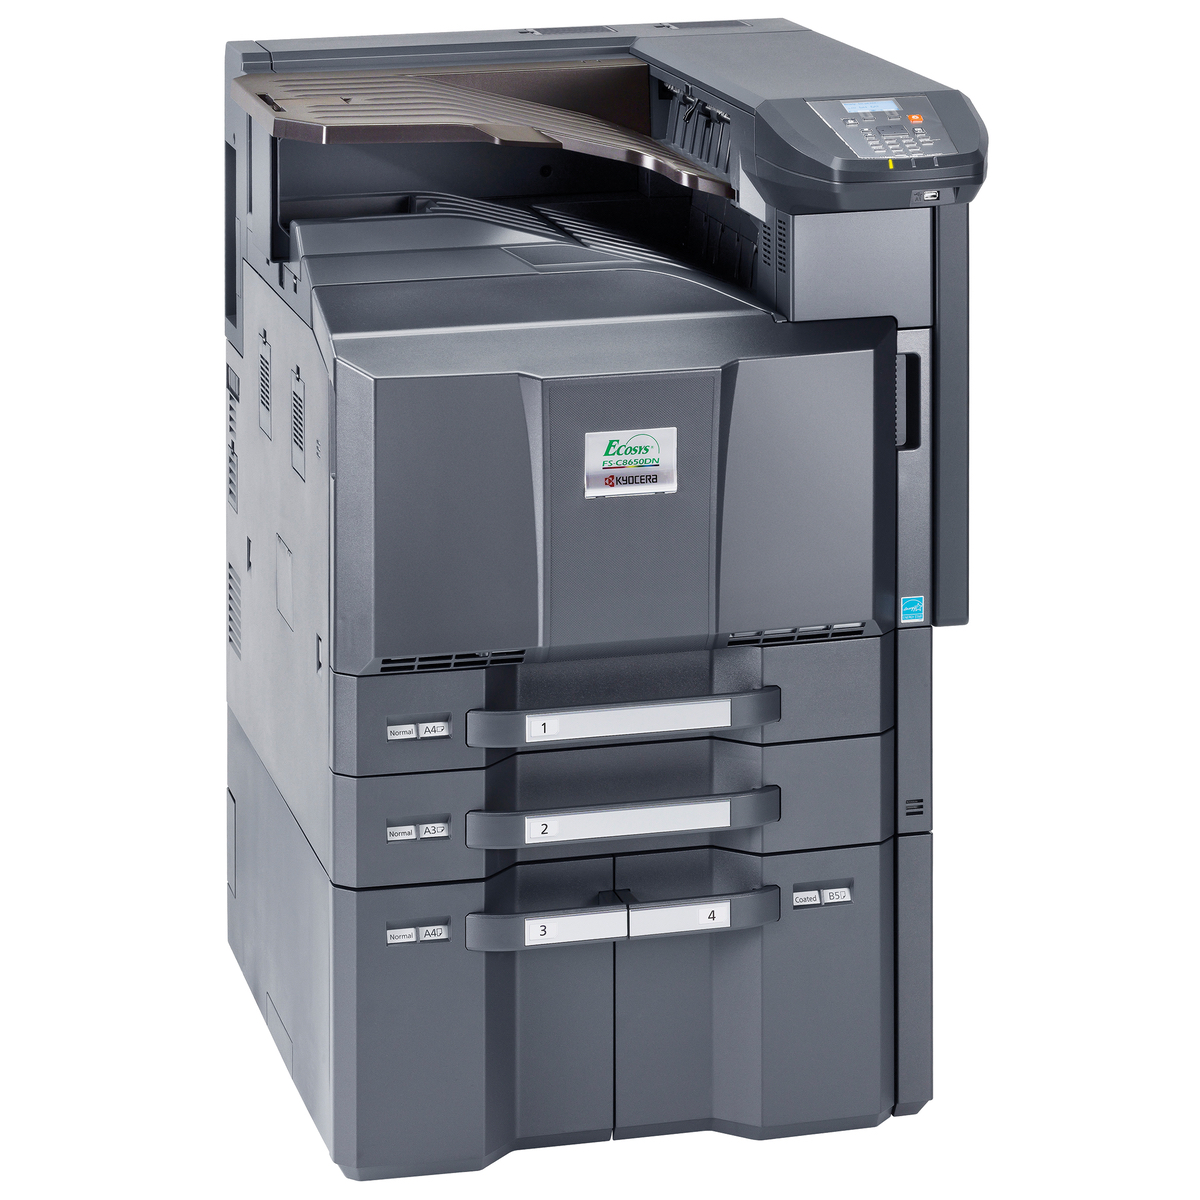 Kyocera FS-C8650DN Printer